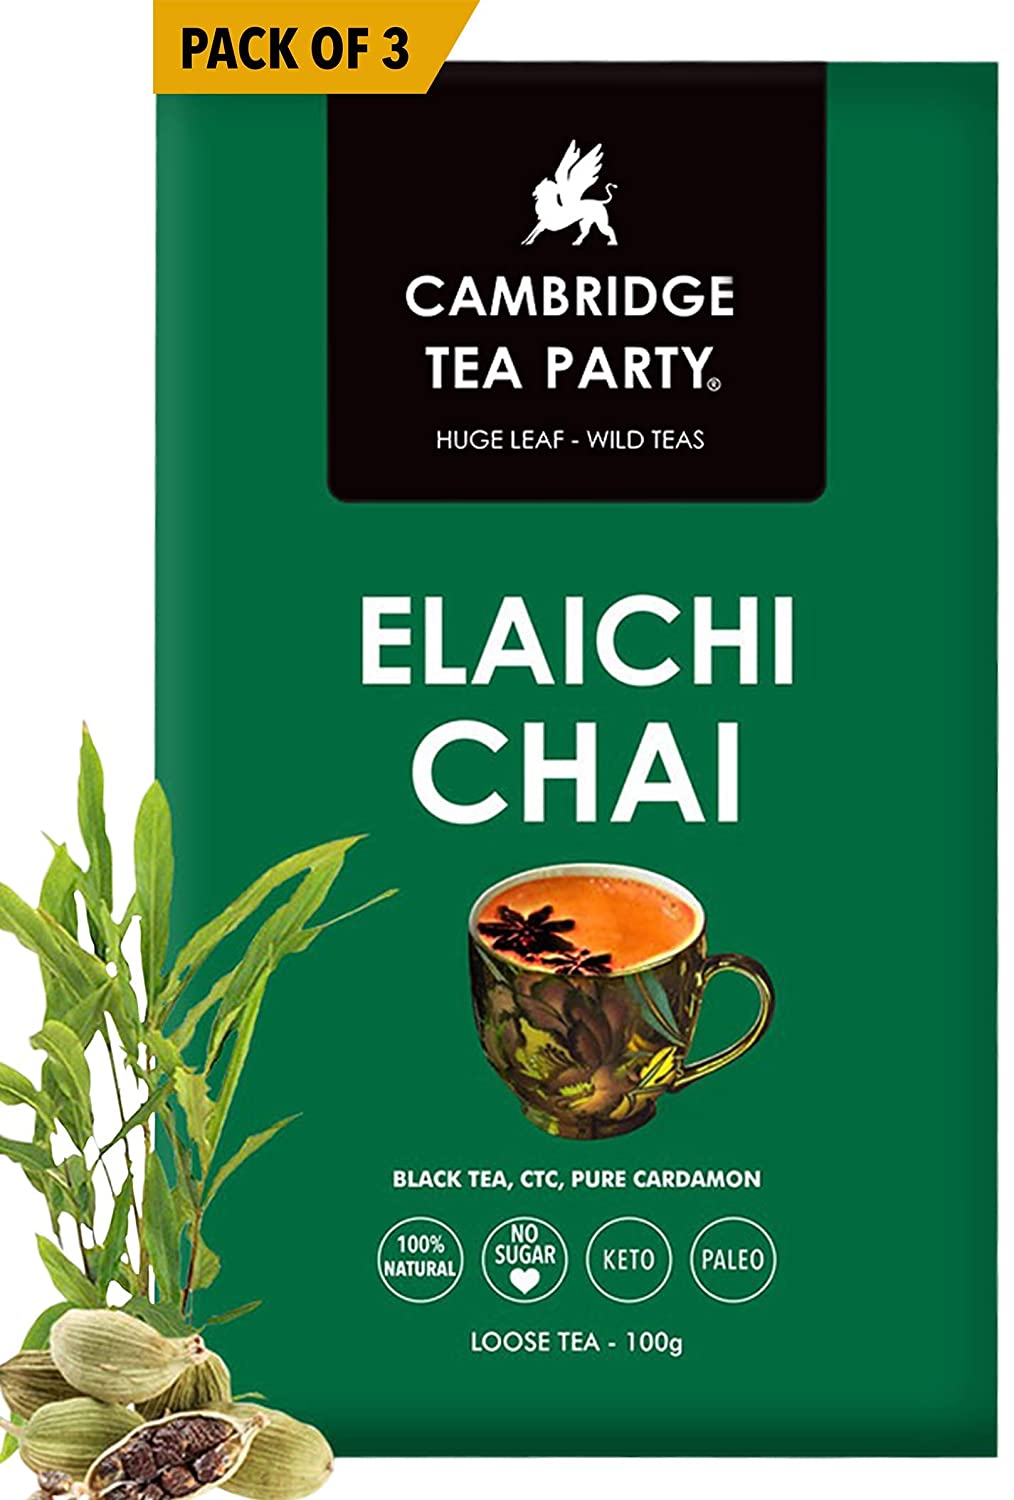 Cambridge Tea Party Cardamom Elaichi Chai Patti Tea Powder CTC, 100g  (Pack of 3)